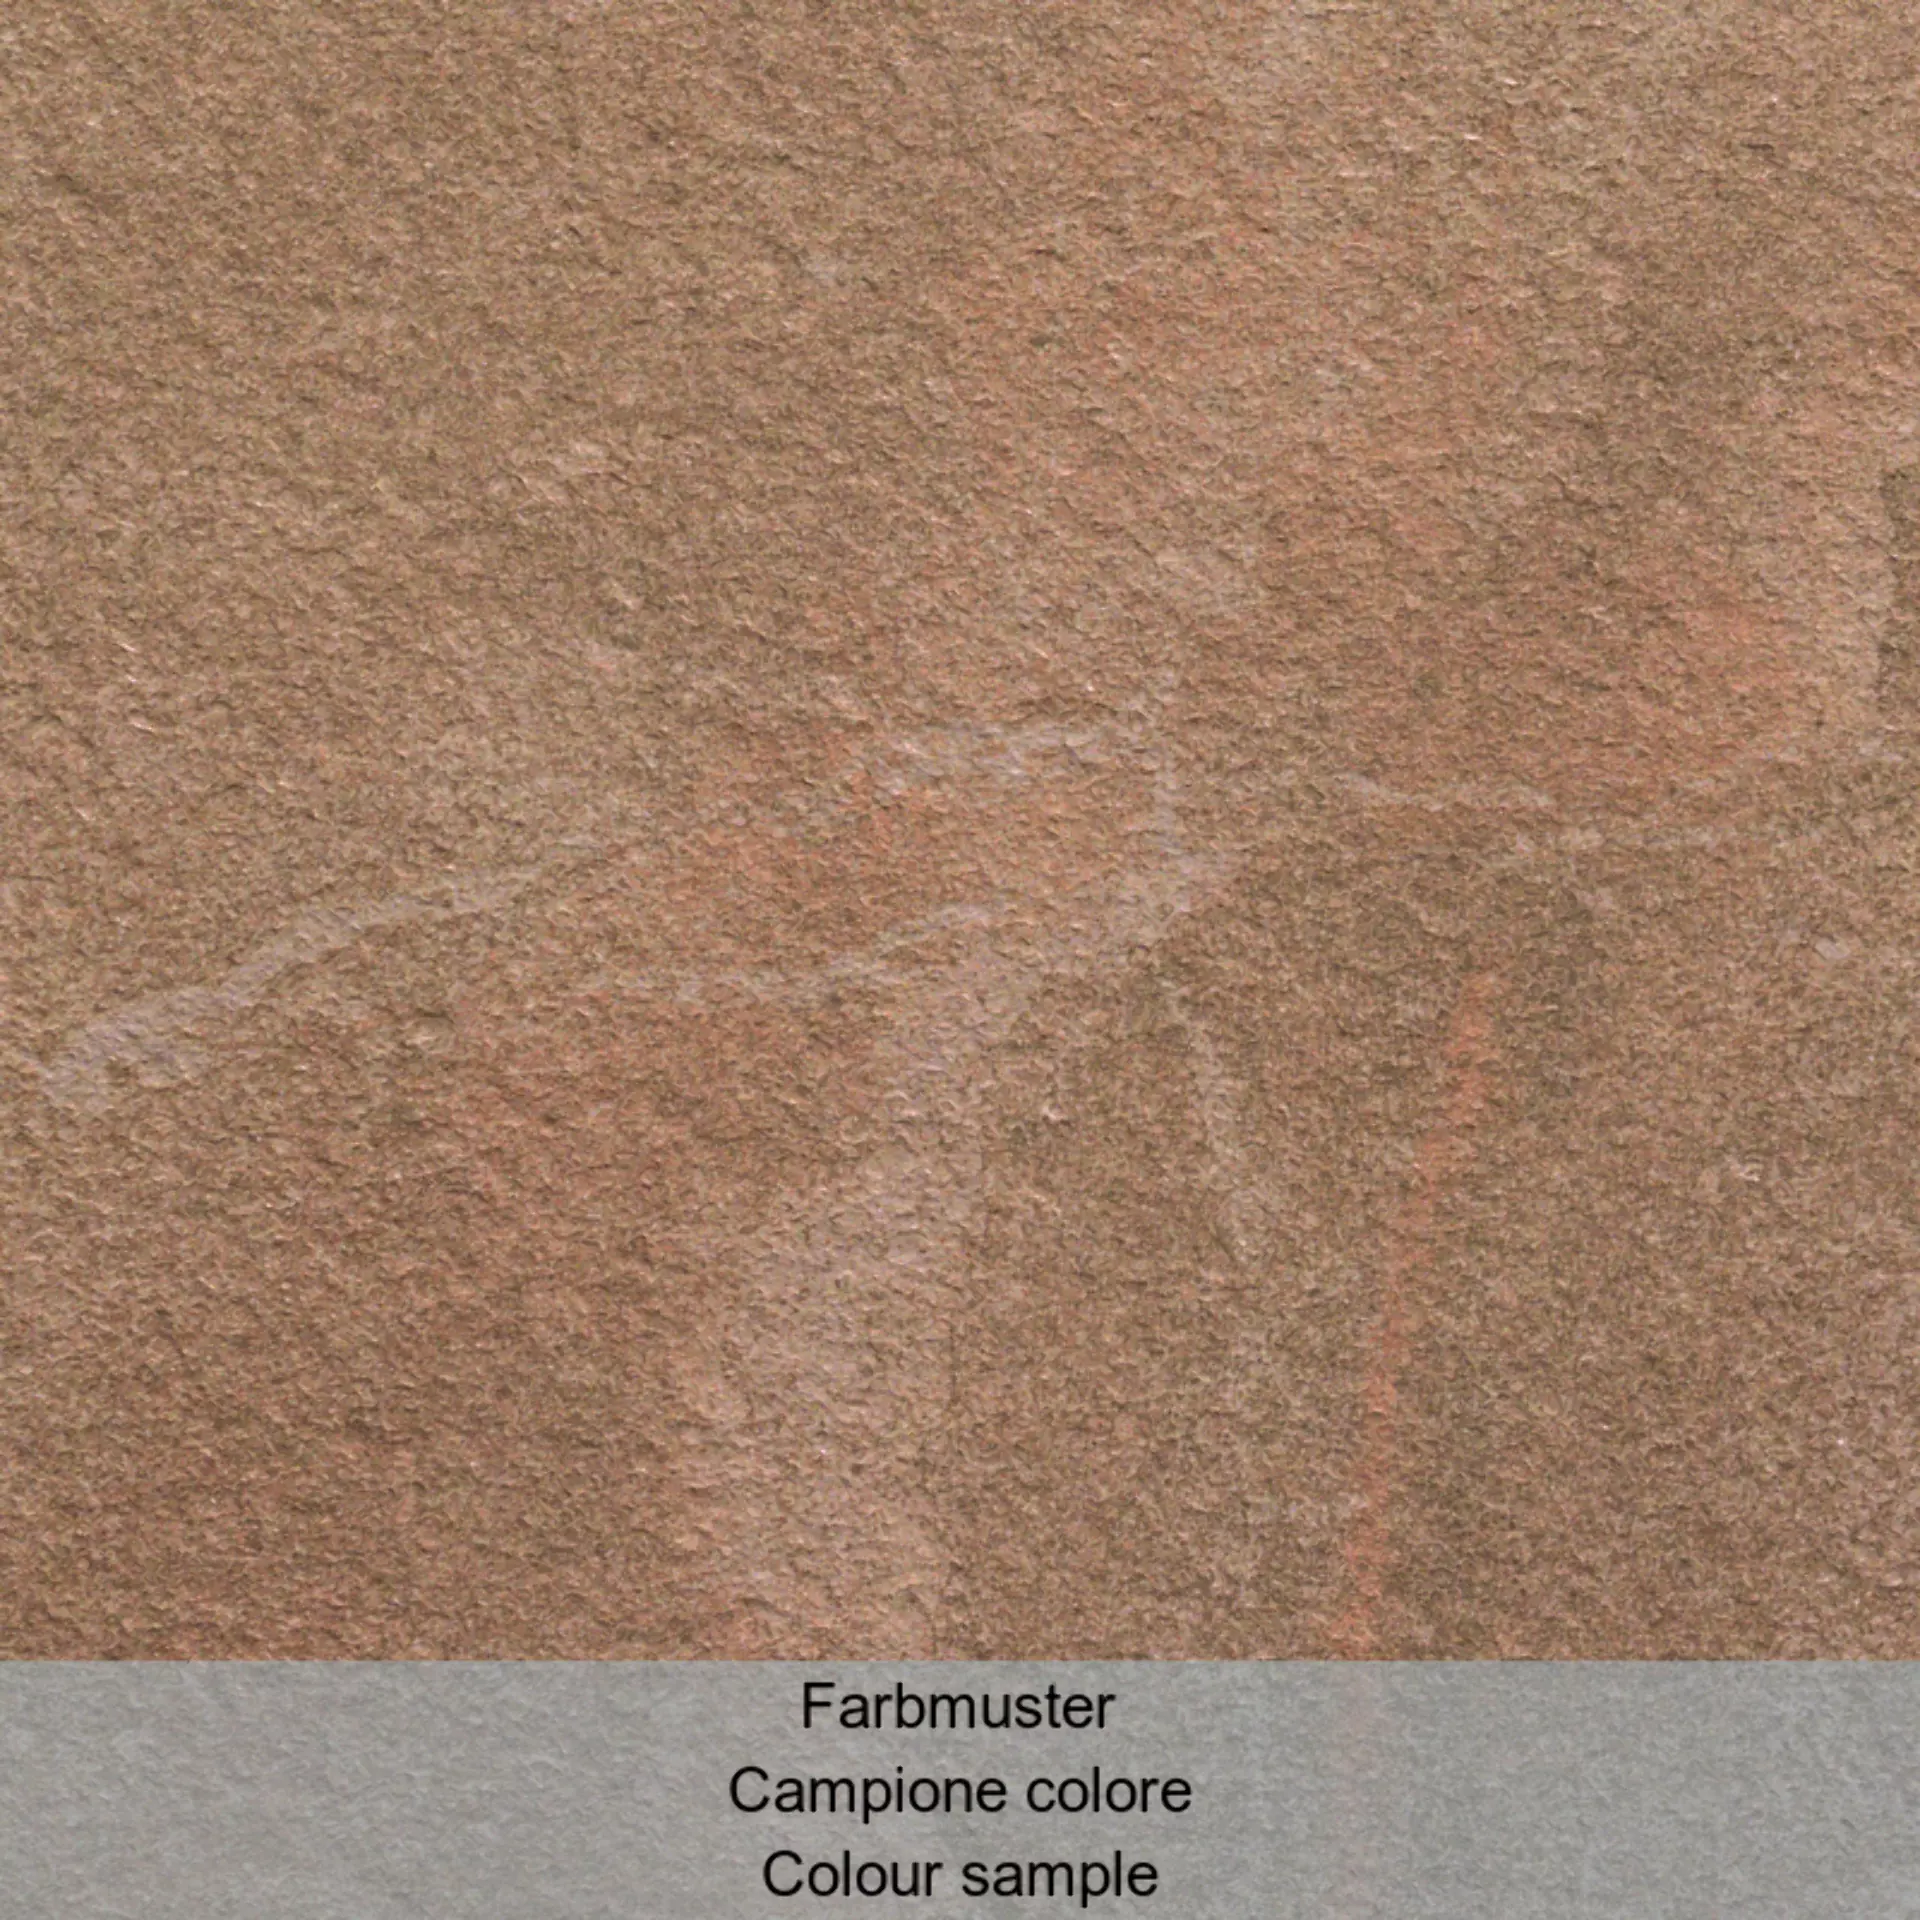 Casalgrande Amazzonia Dragon Brown Naturale – Matt 4700070 30x30cm rectified 9mm